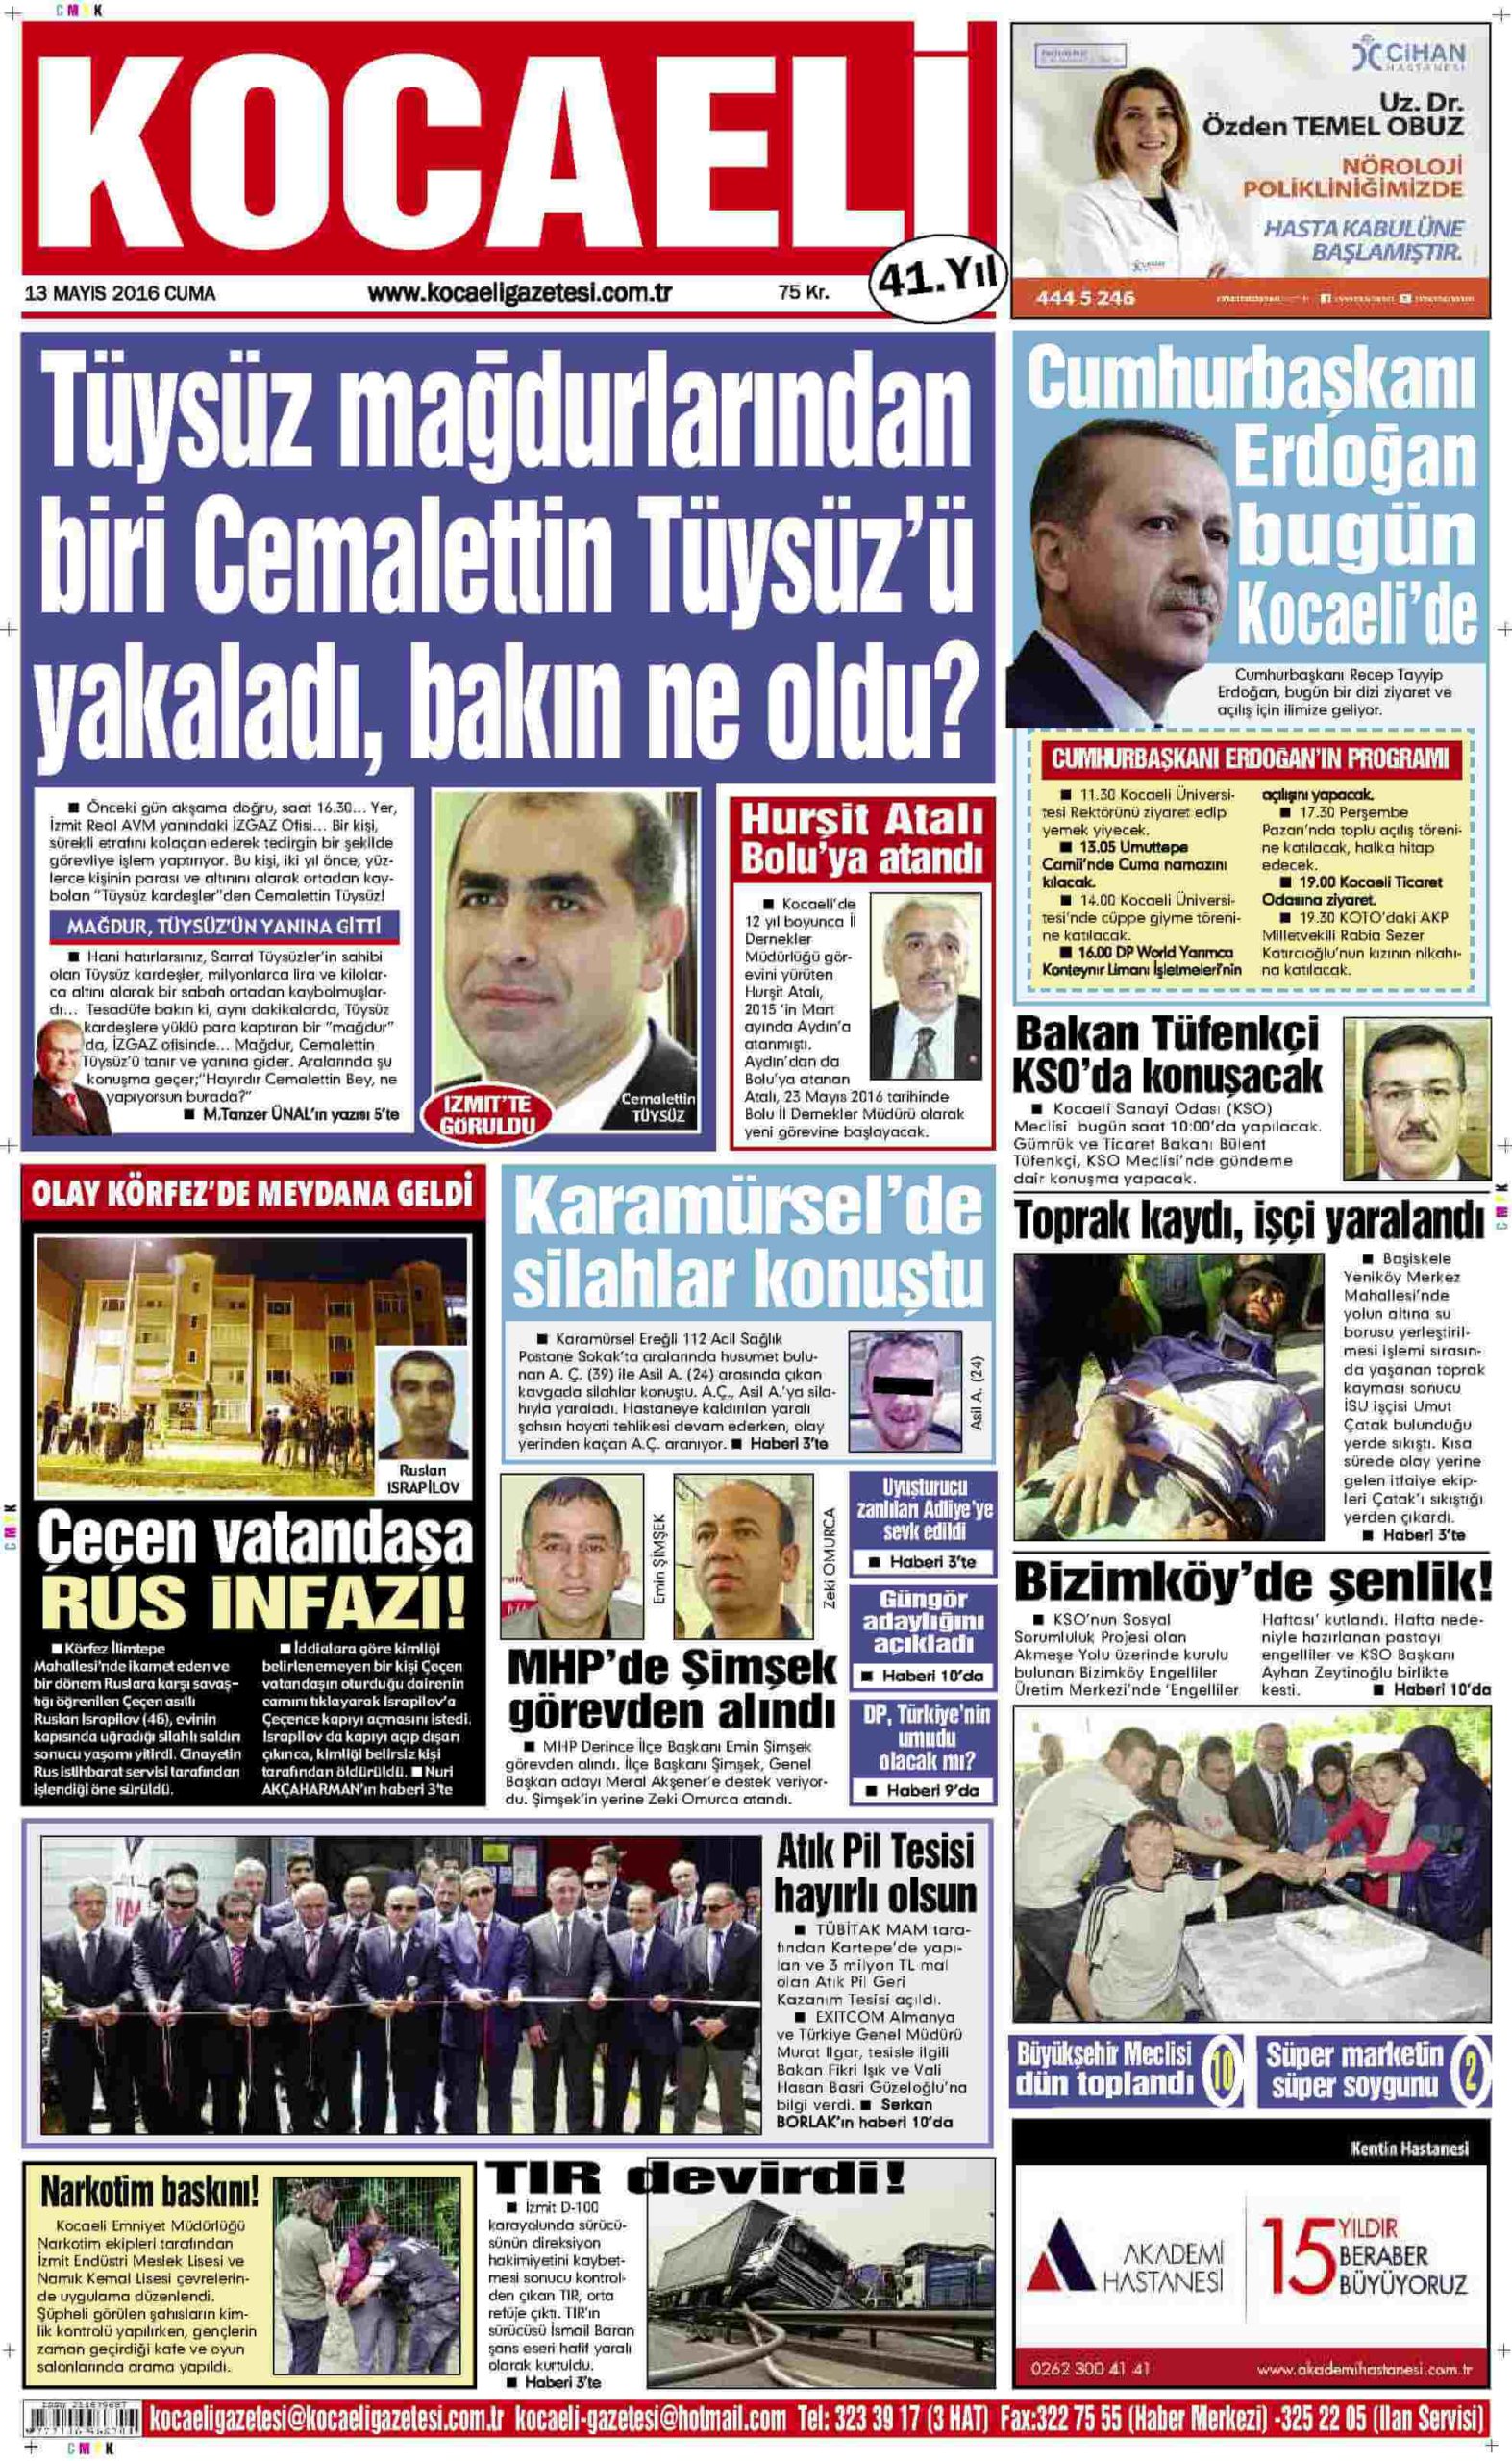 Turkish Newspapers 32 Kocaeli Gazetesi scaled